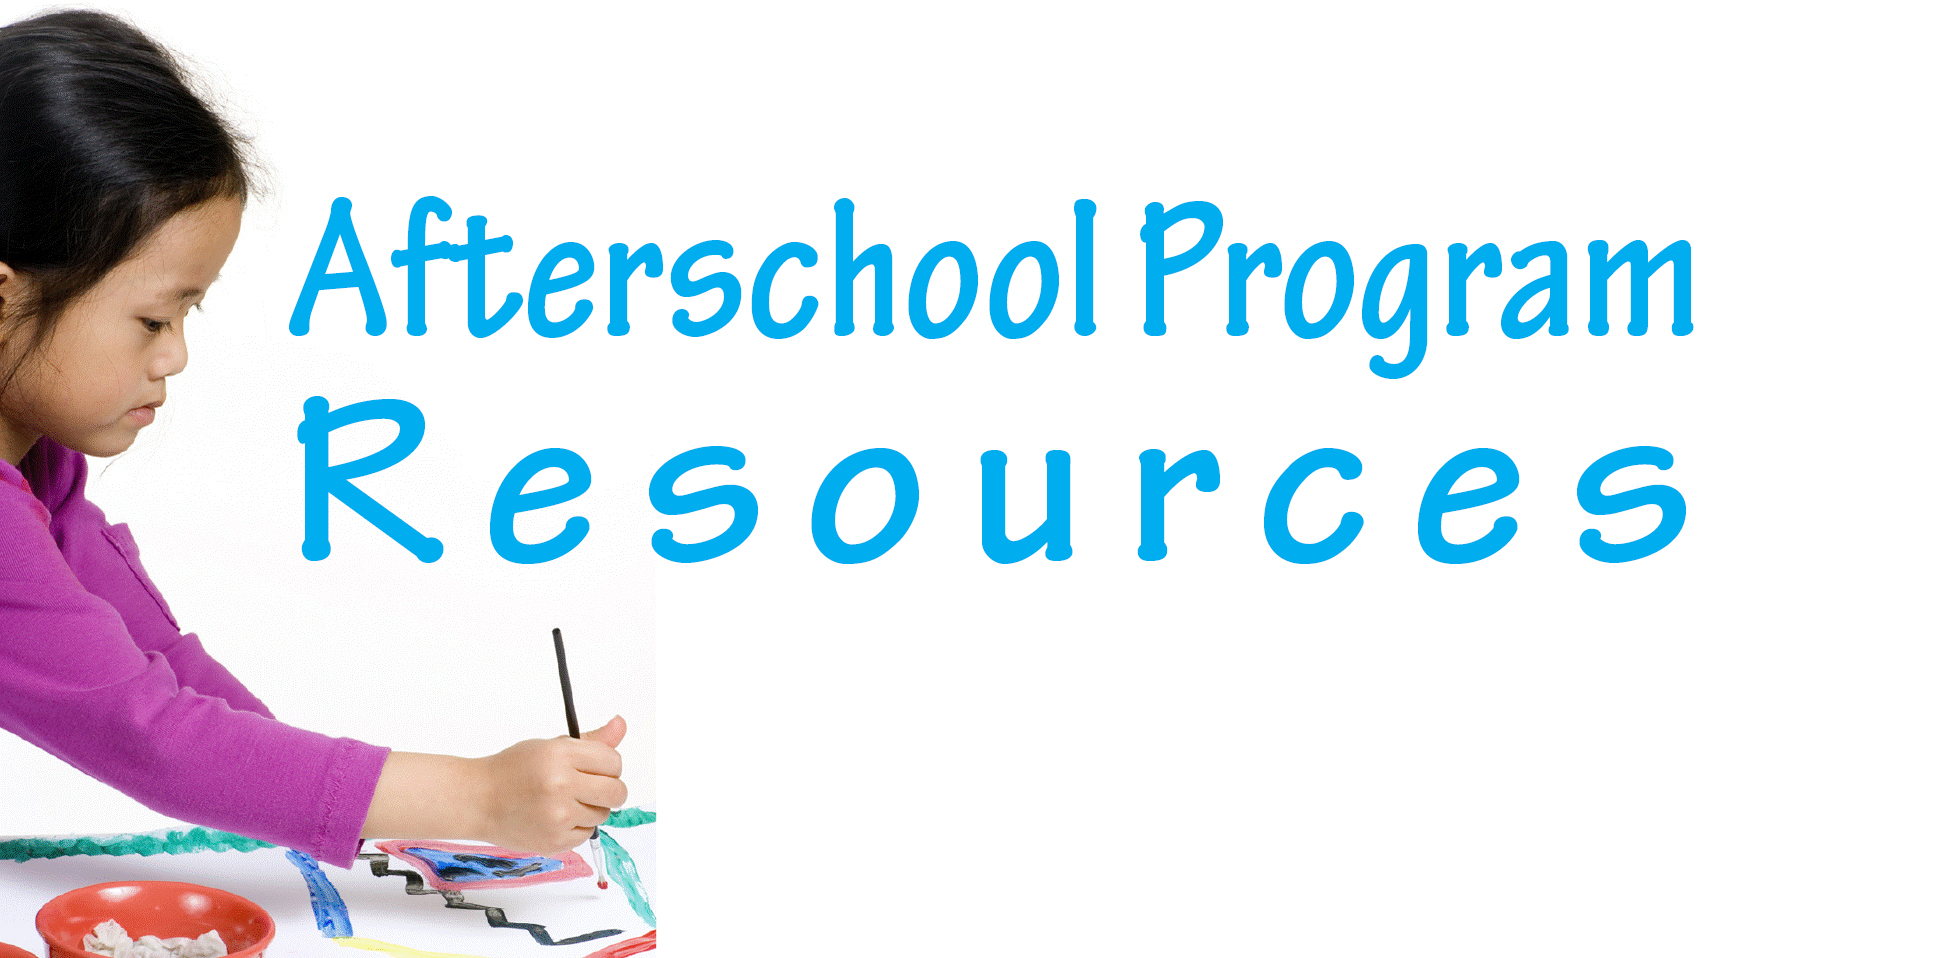 Curriculum For Afterschool Programs